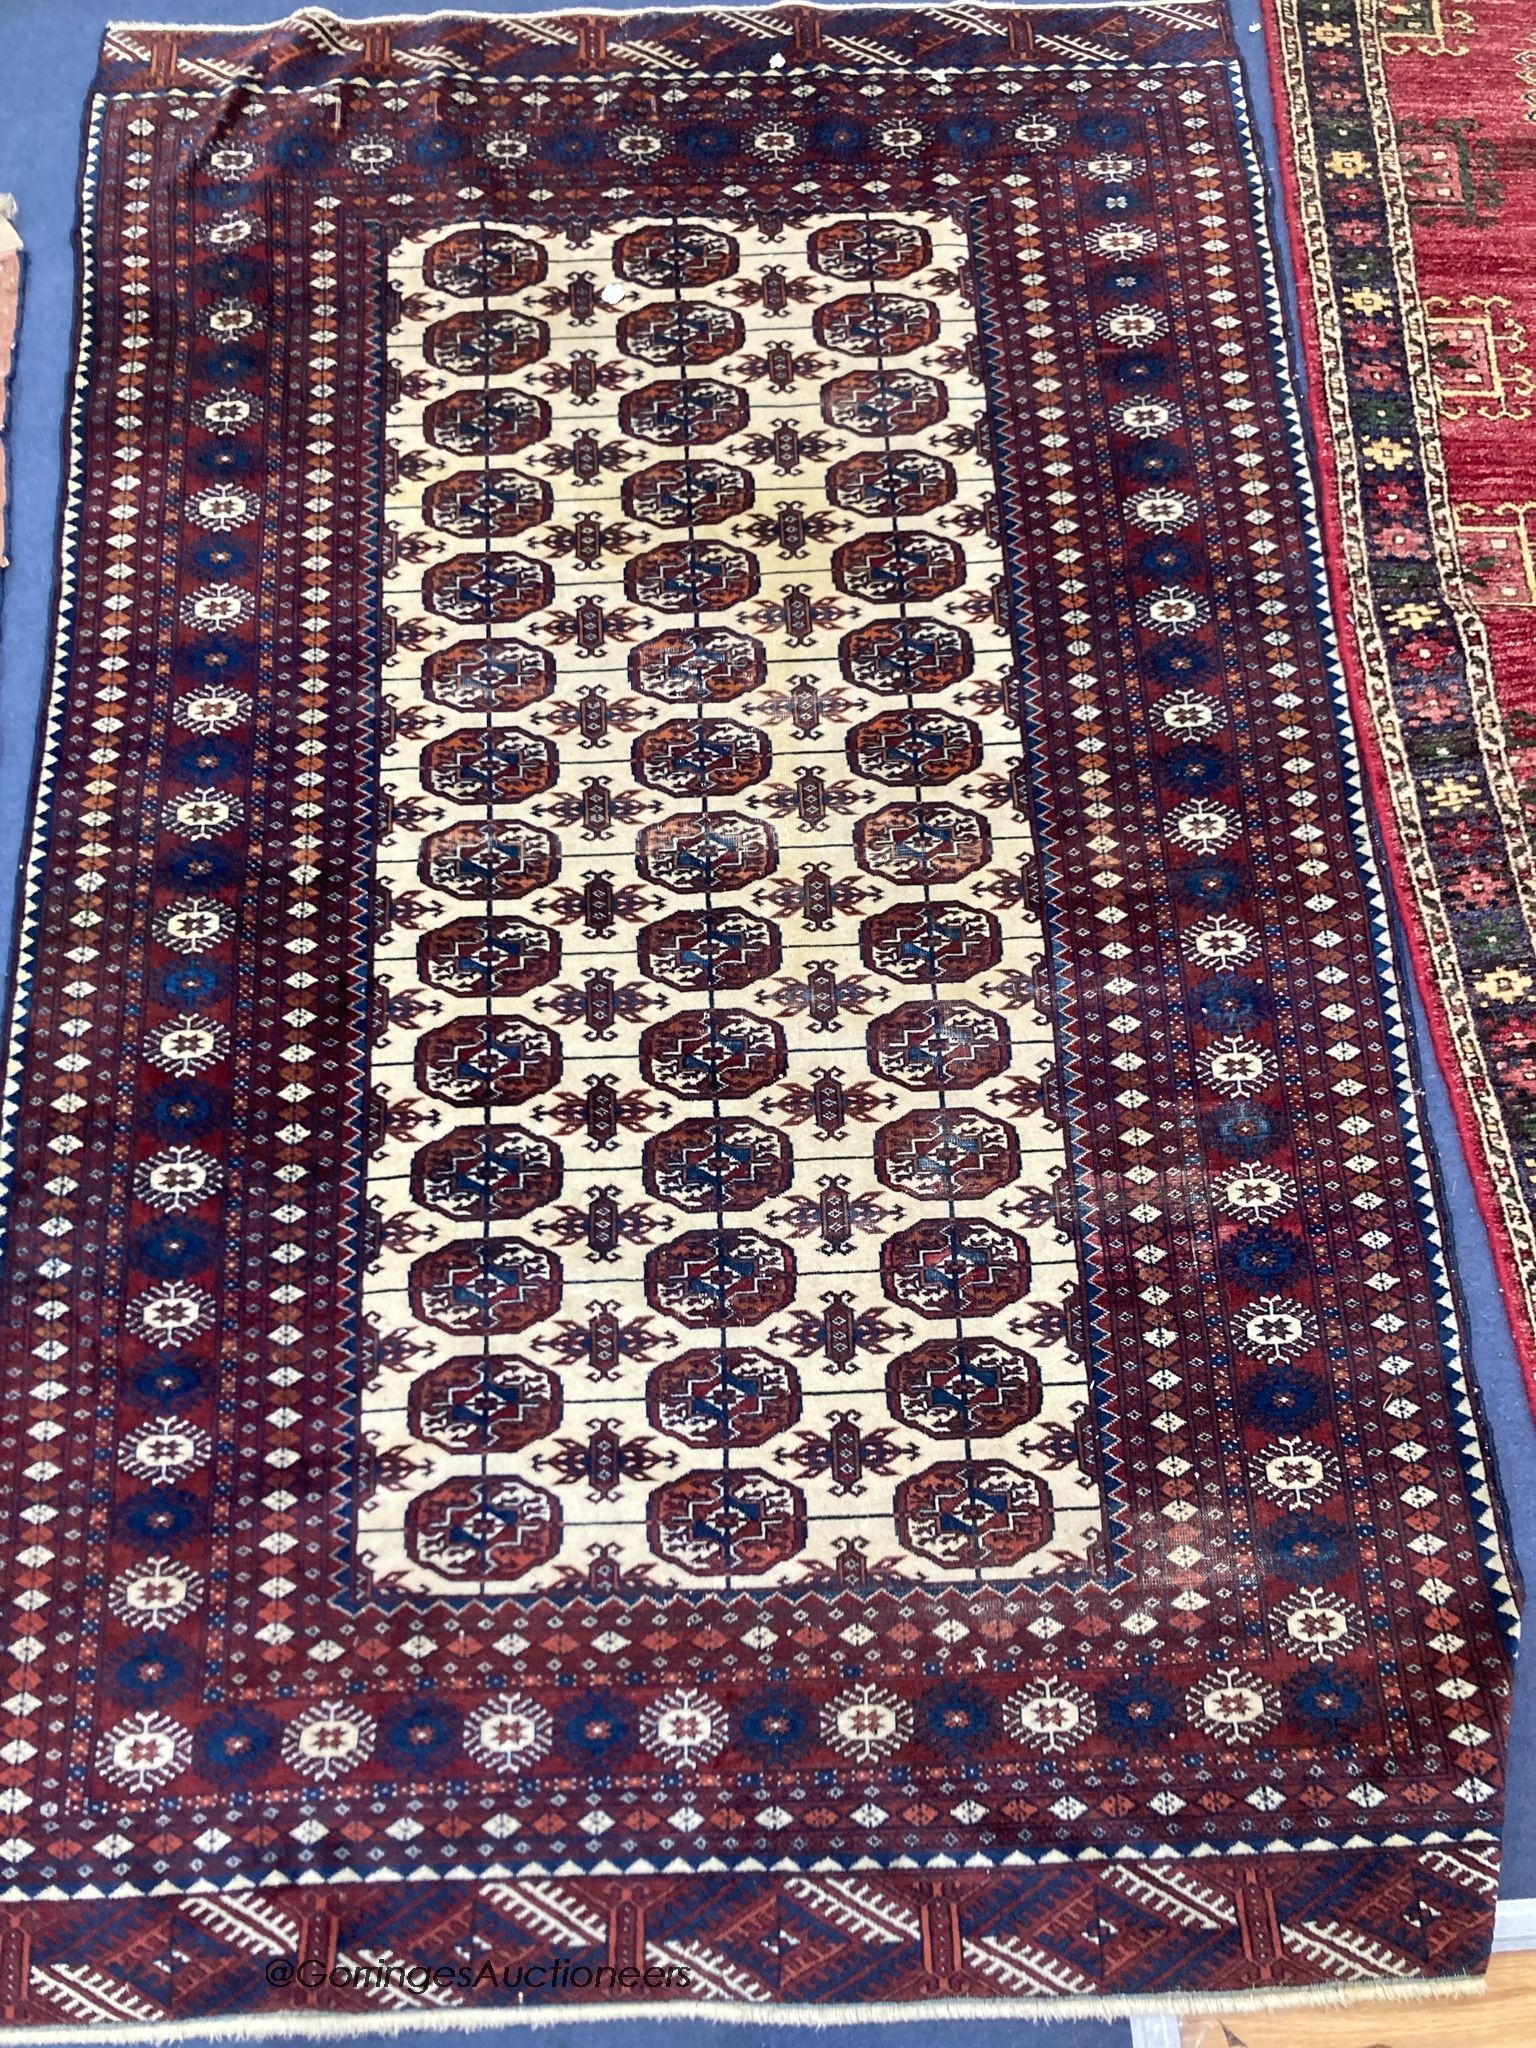 A Bokhara ivory ground rug, 190 x 120cm